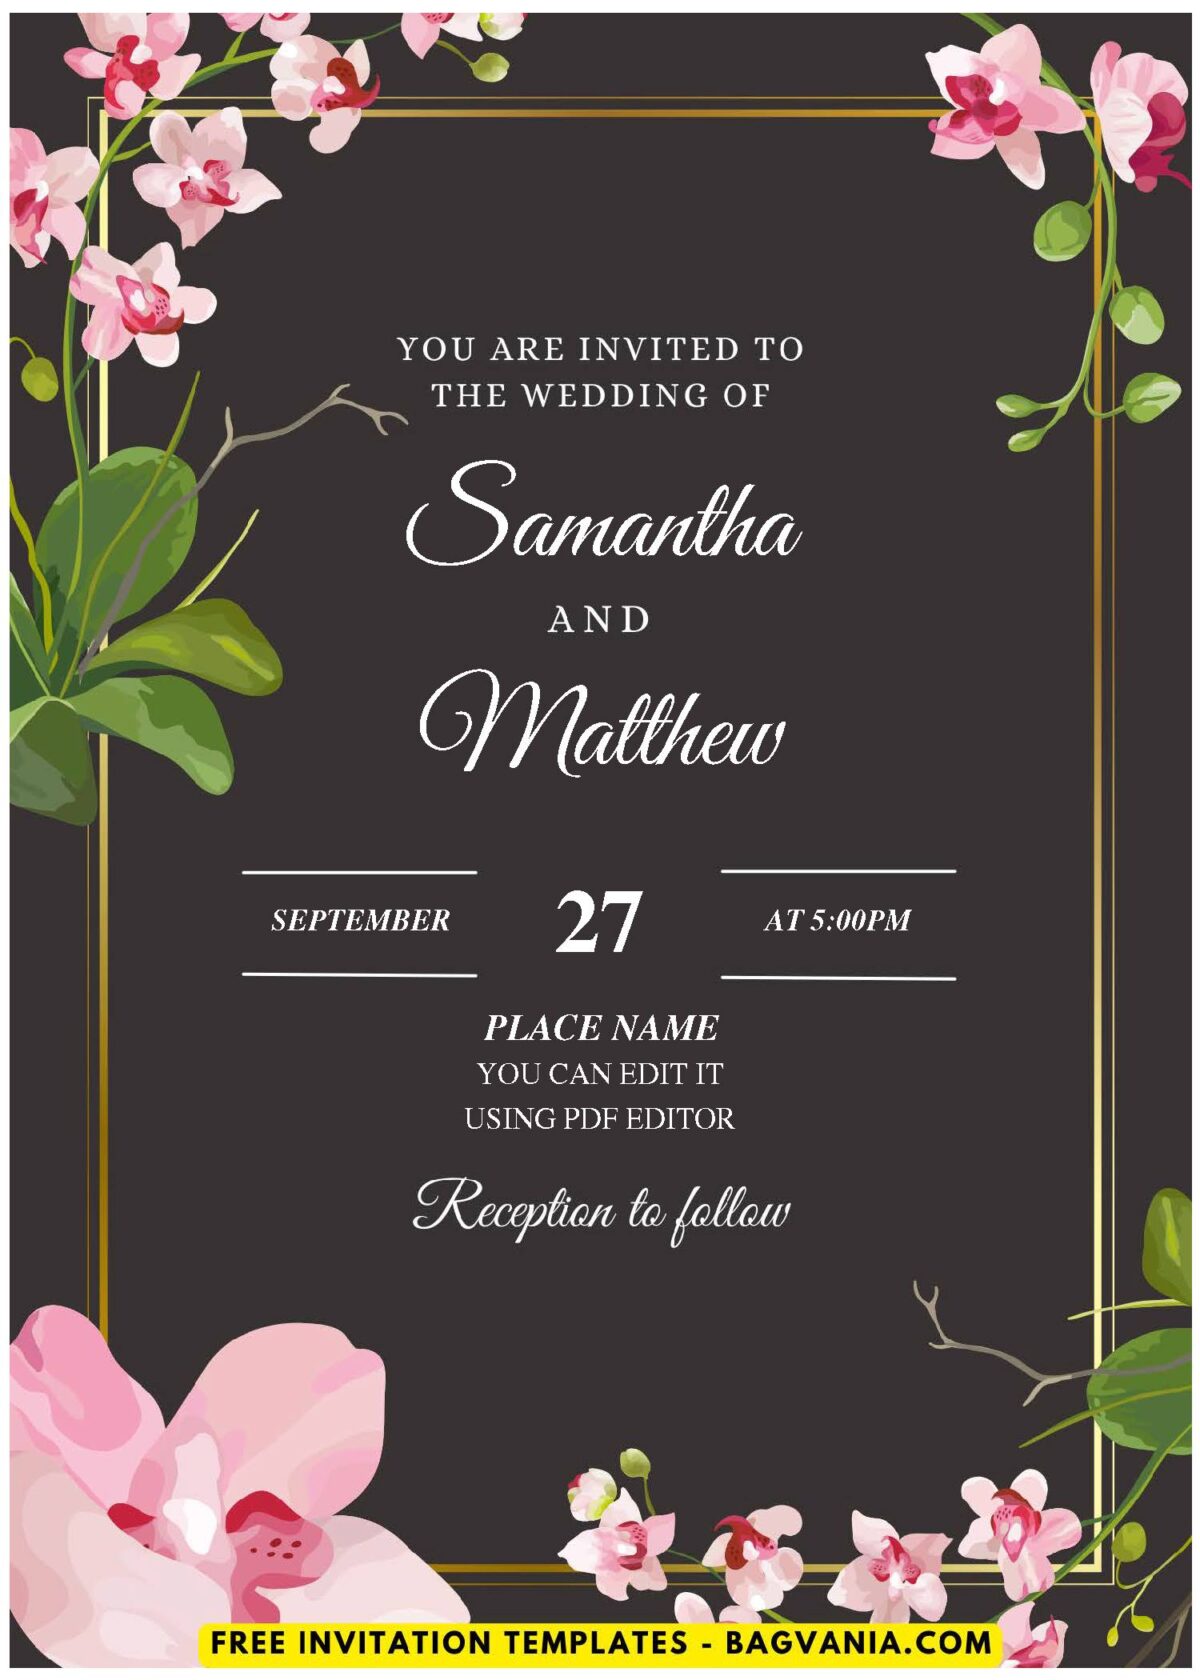 (Easily Edit PDF Invitation) Beautiful Magnolia & Sakura Wedding Invitation D